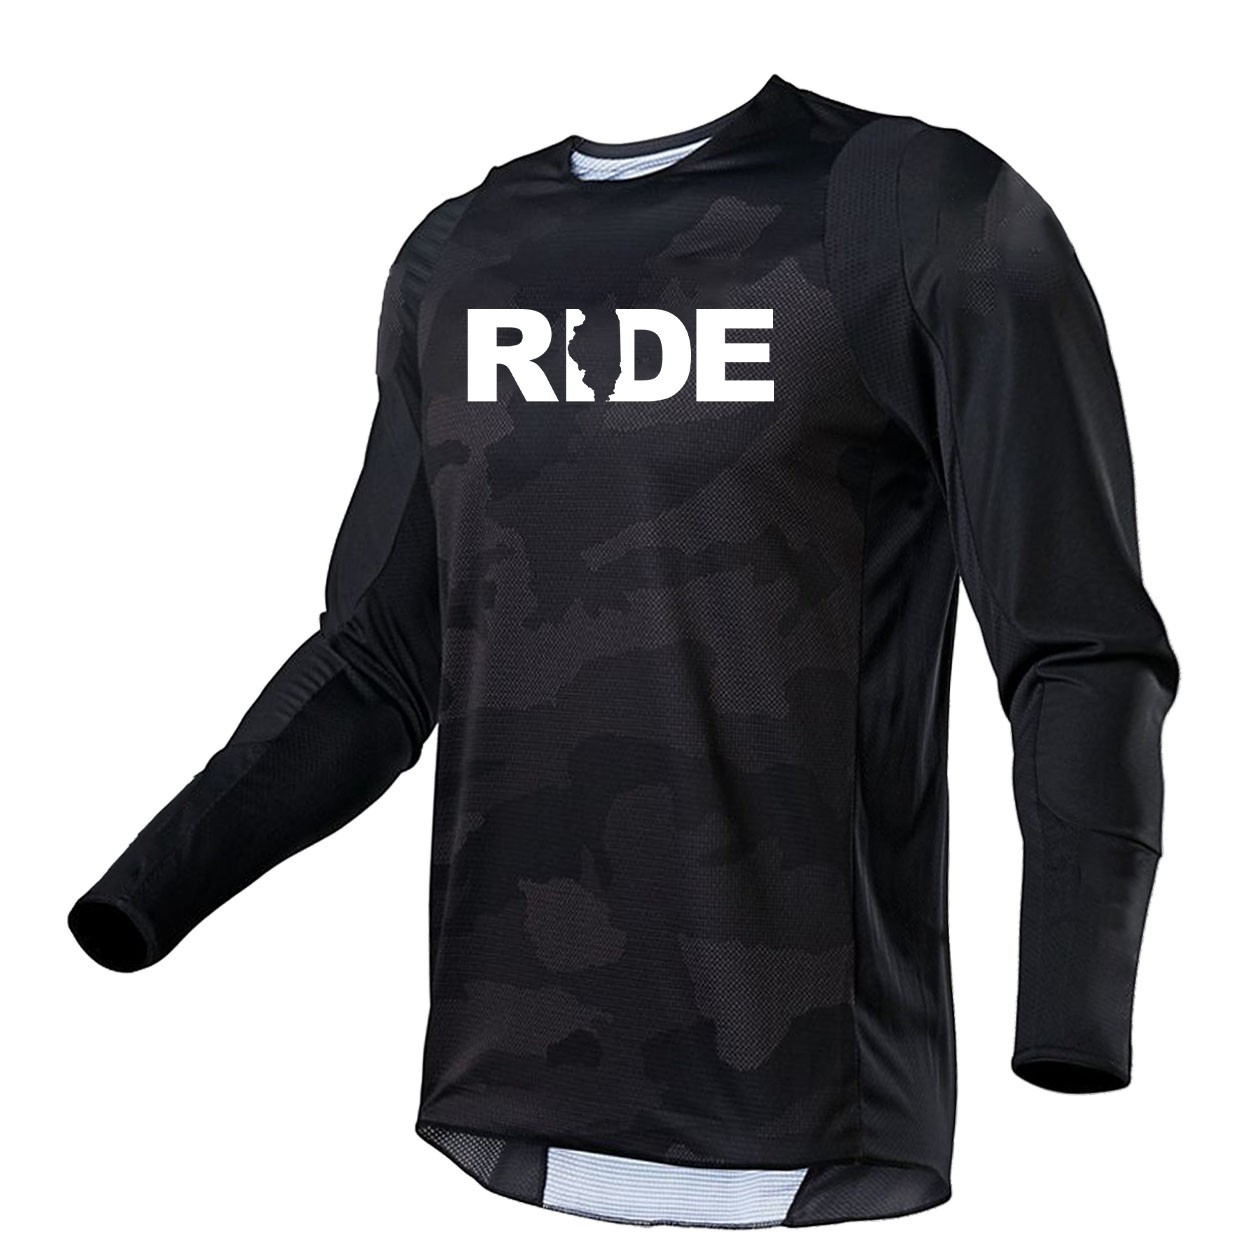 Ride Illinois Classic Performance Jersey Long Sleeve Shirt Black Camo